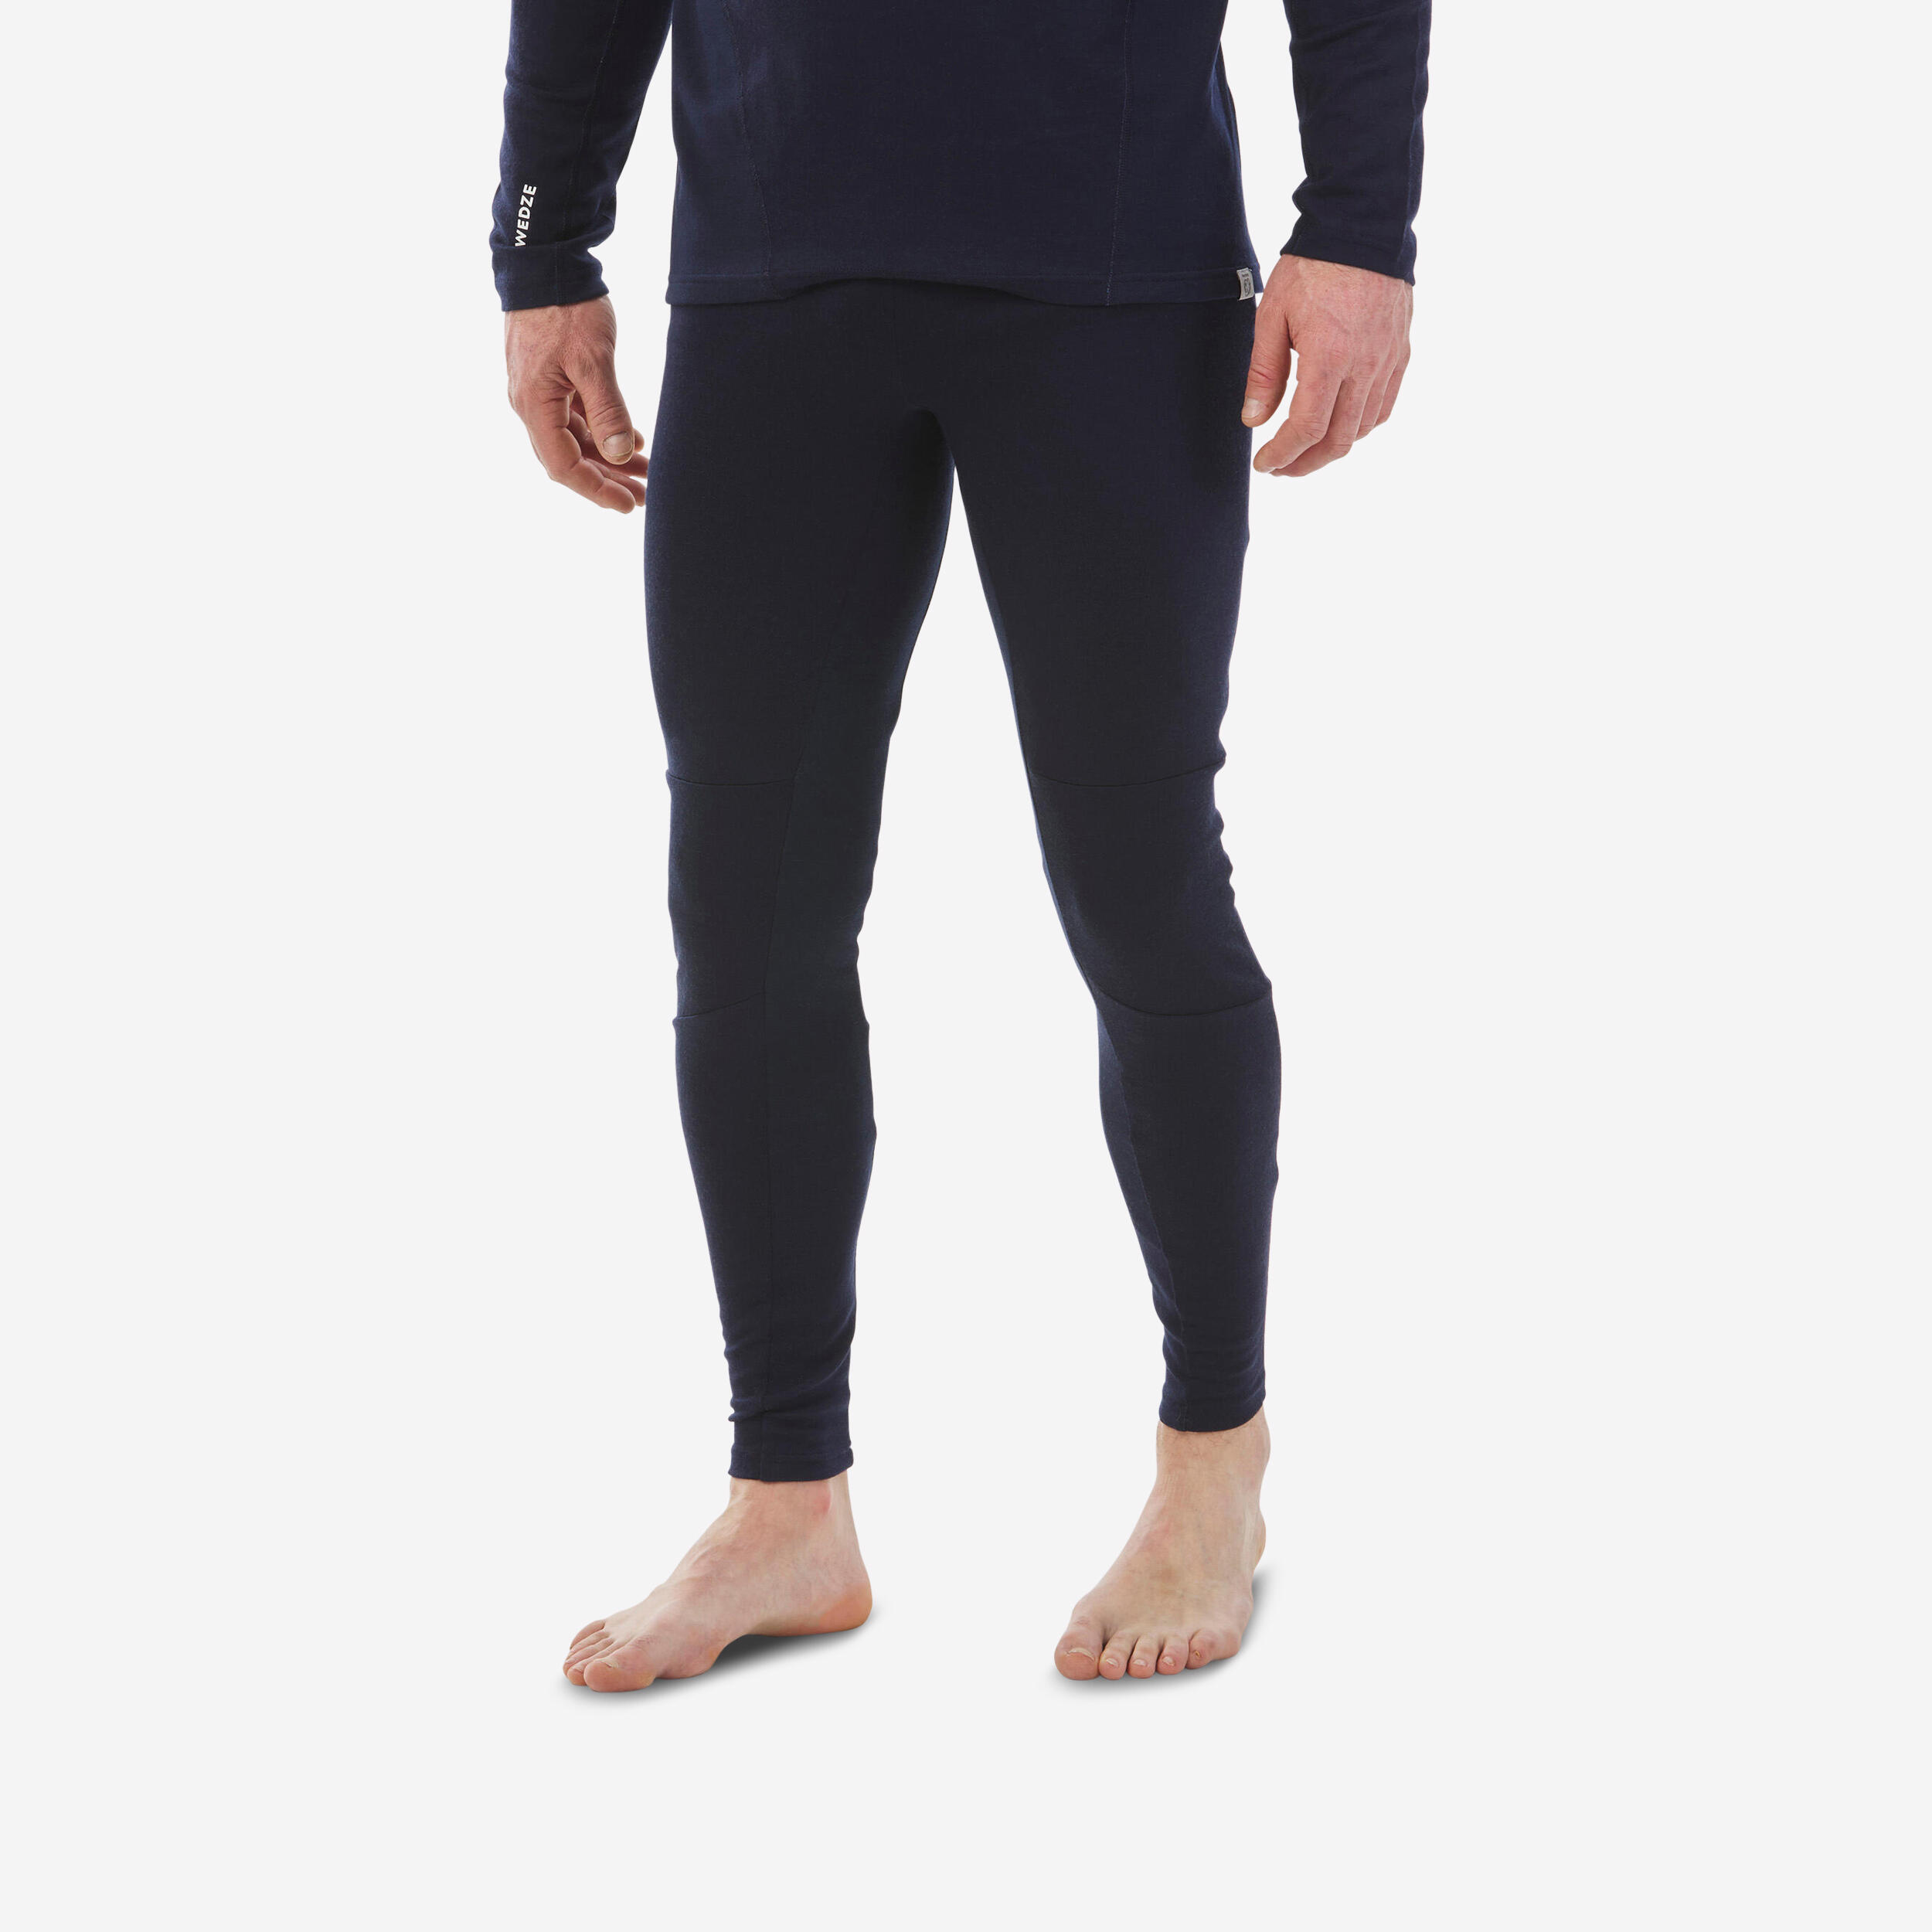 Men's Merino Wool Base Layer Bottoms - BL 900 Blue - Asphalt blue, Black -  Wedze - Decathlon